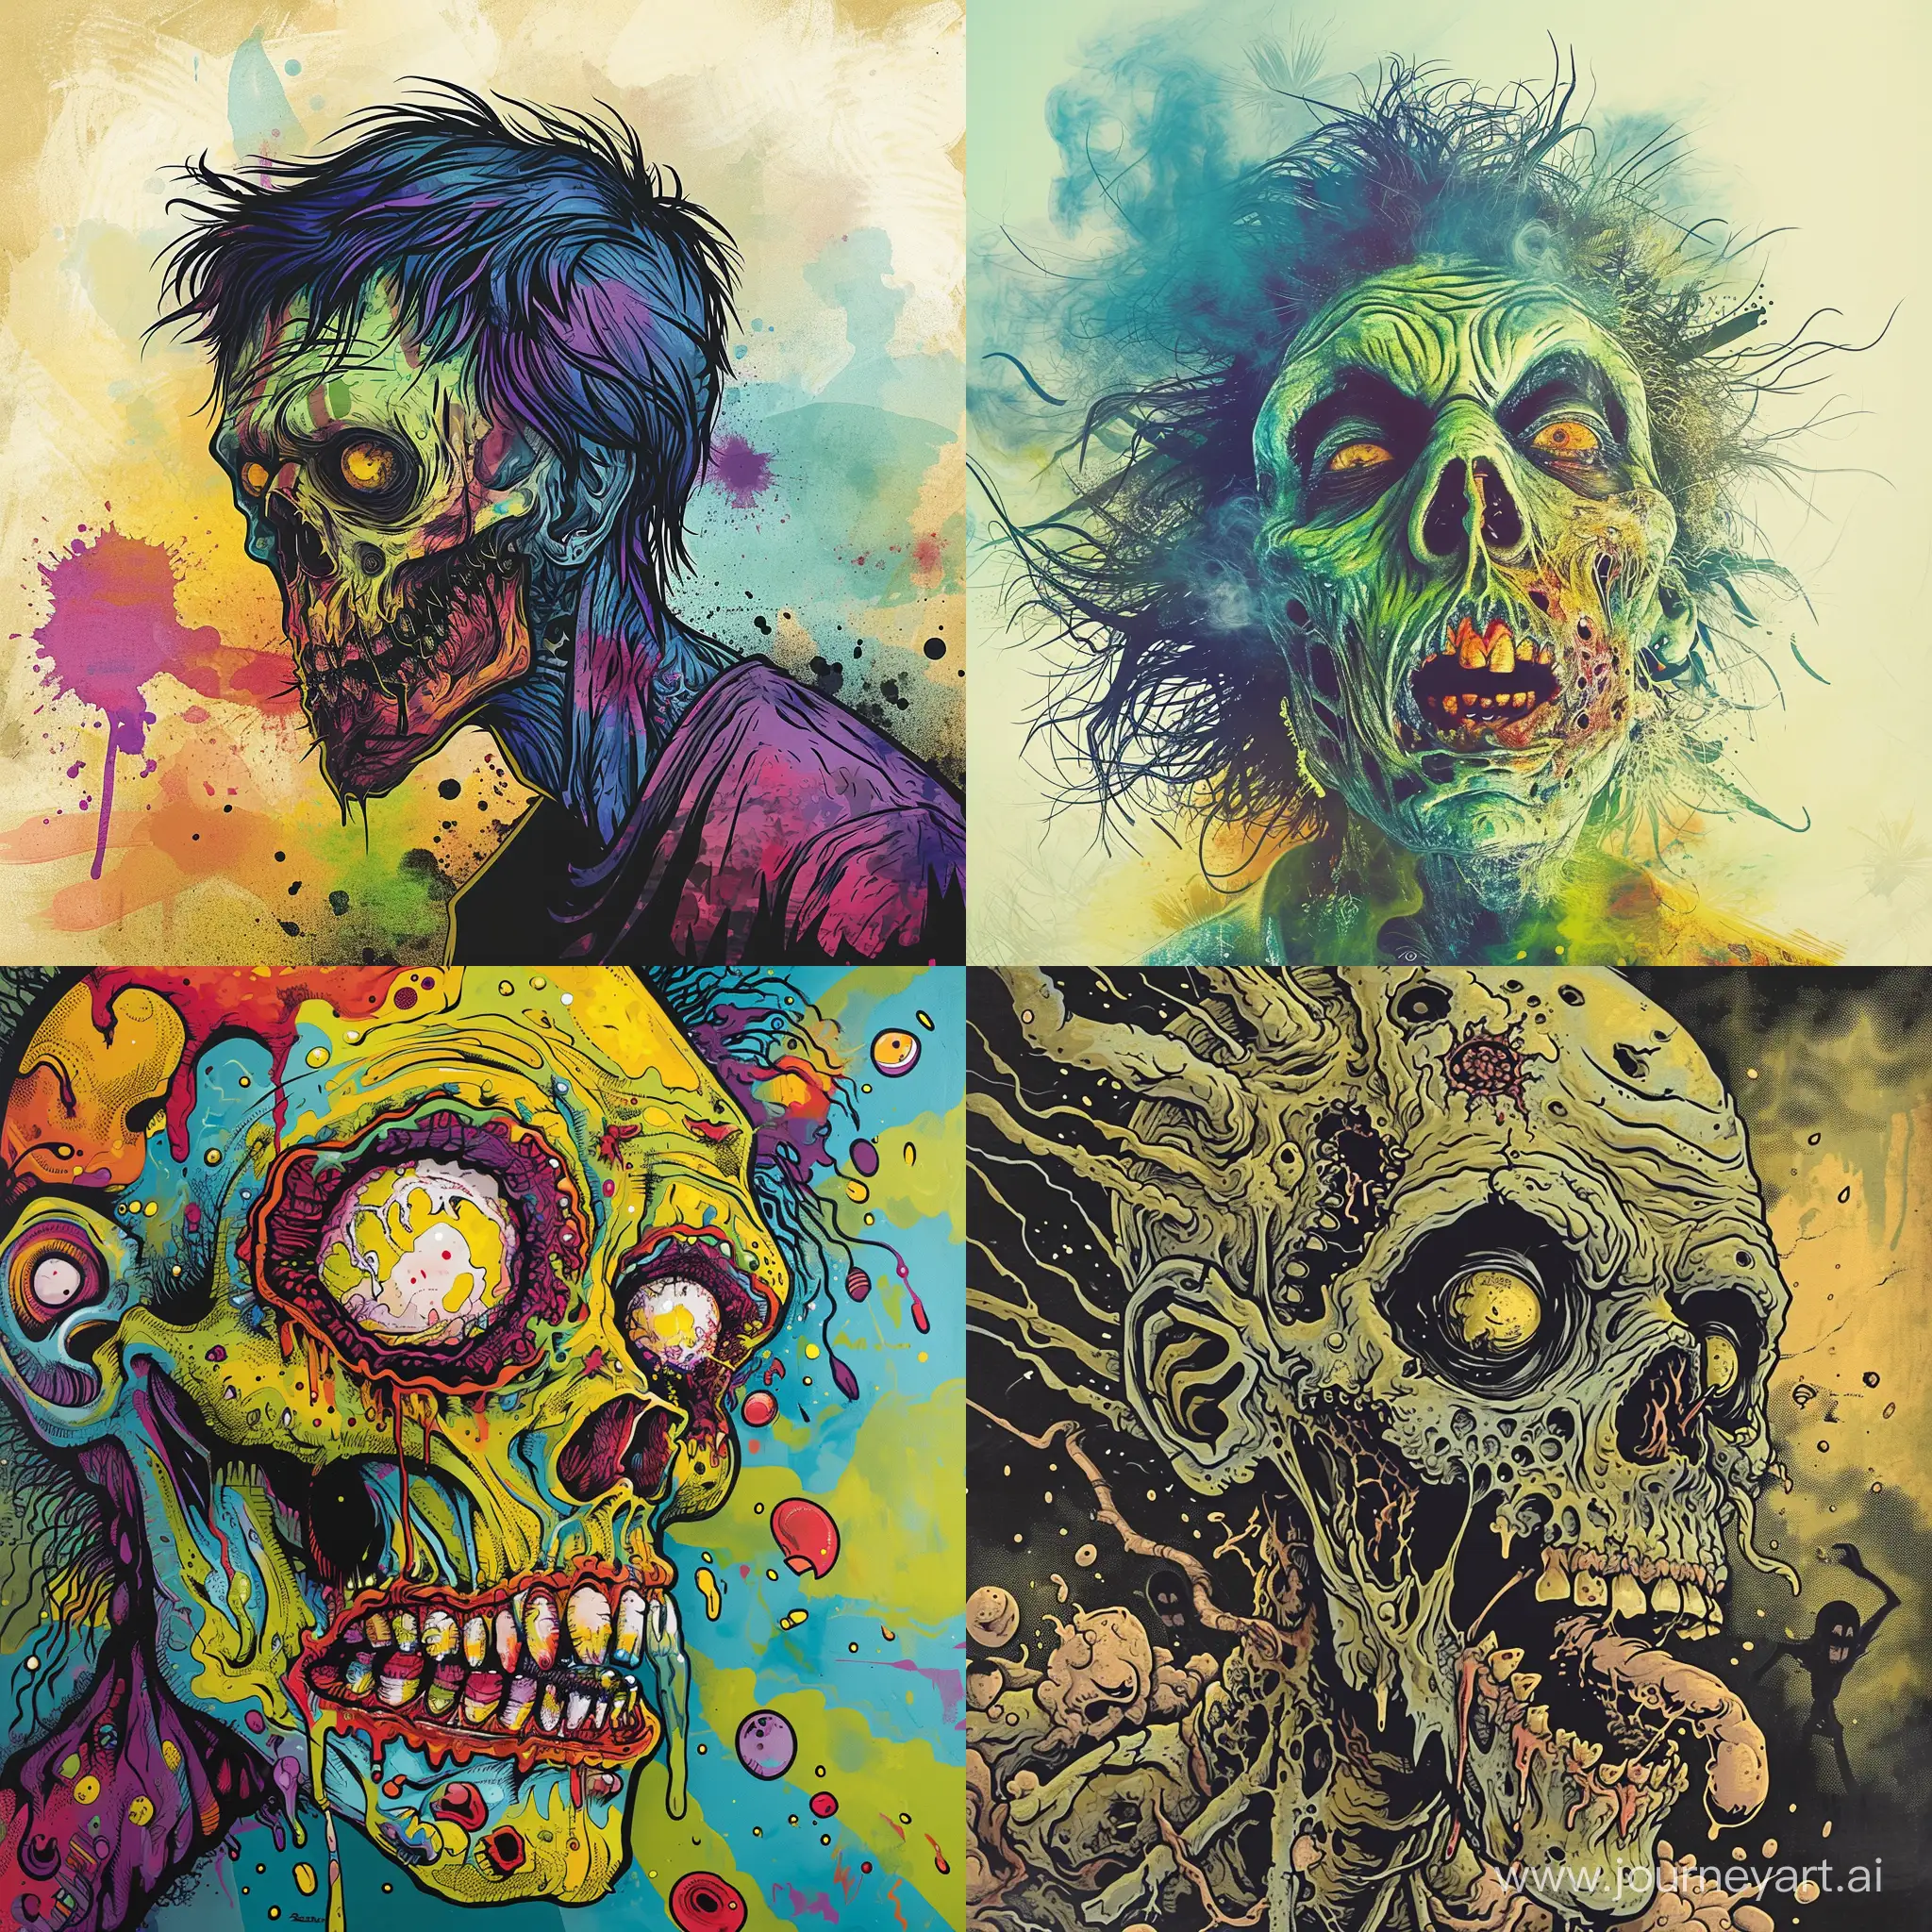 Acid-Zombie-Art-Vivid-Colors-and-Symmetry-in-a-11-Aspect-Ratio